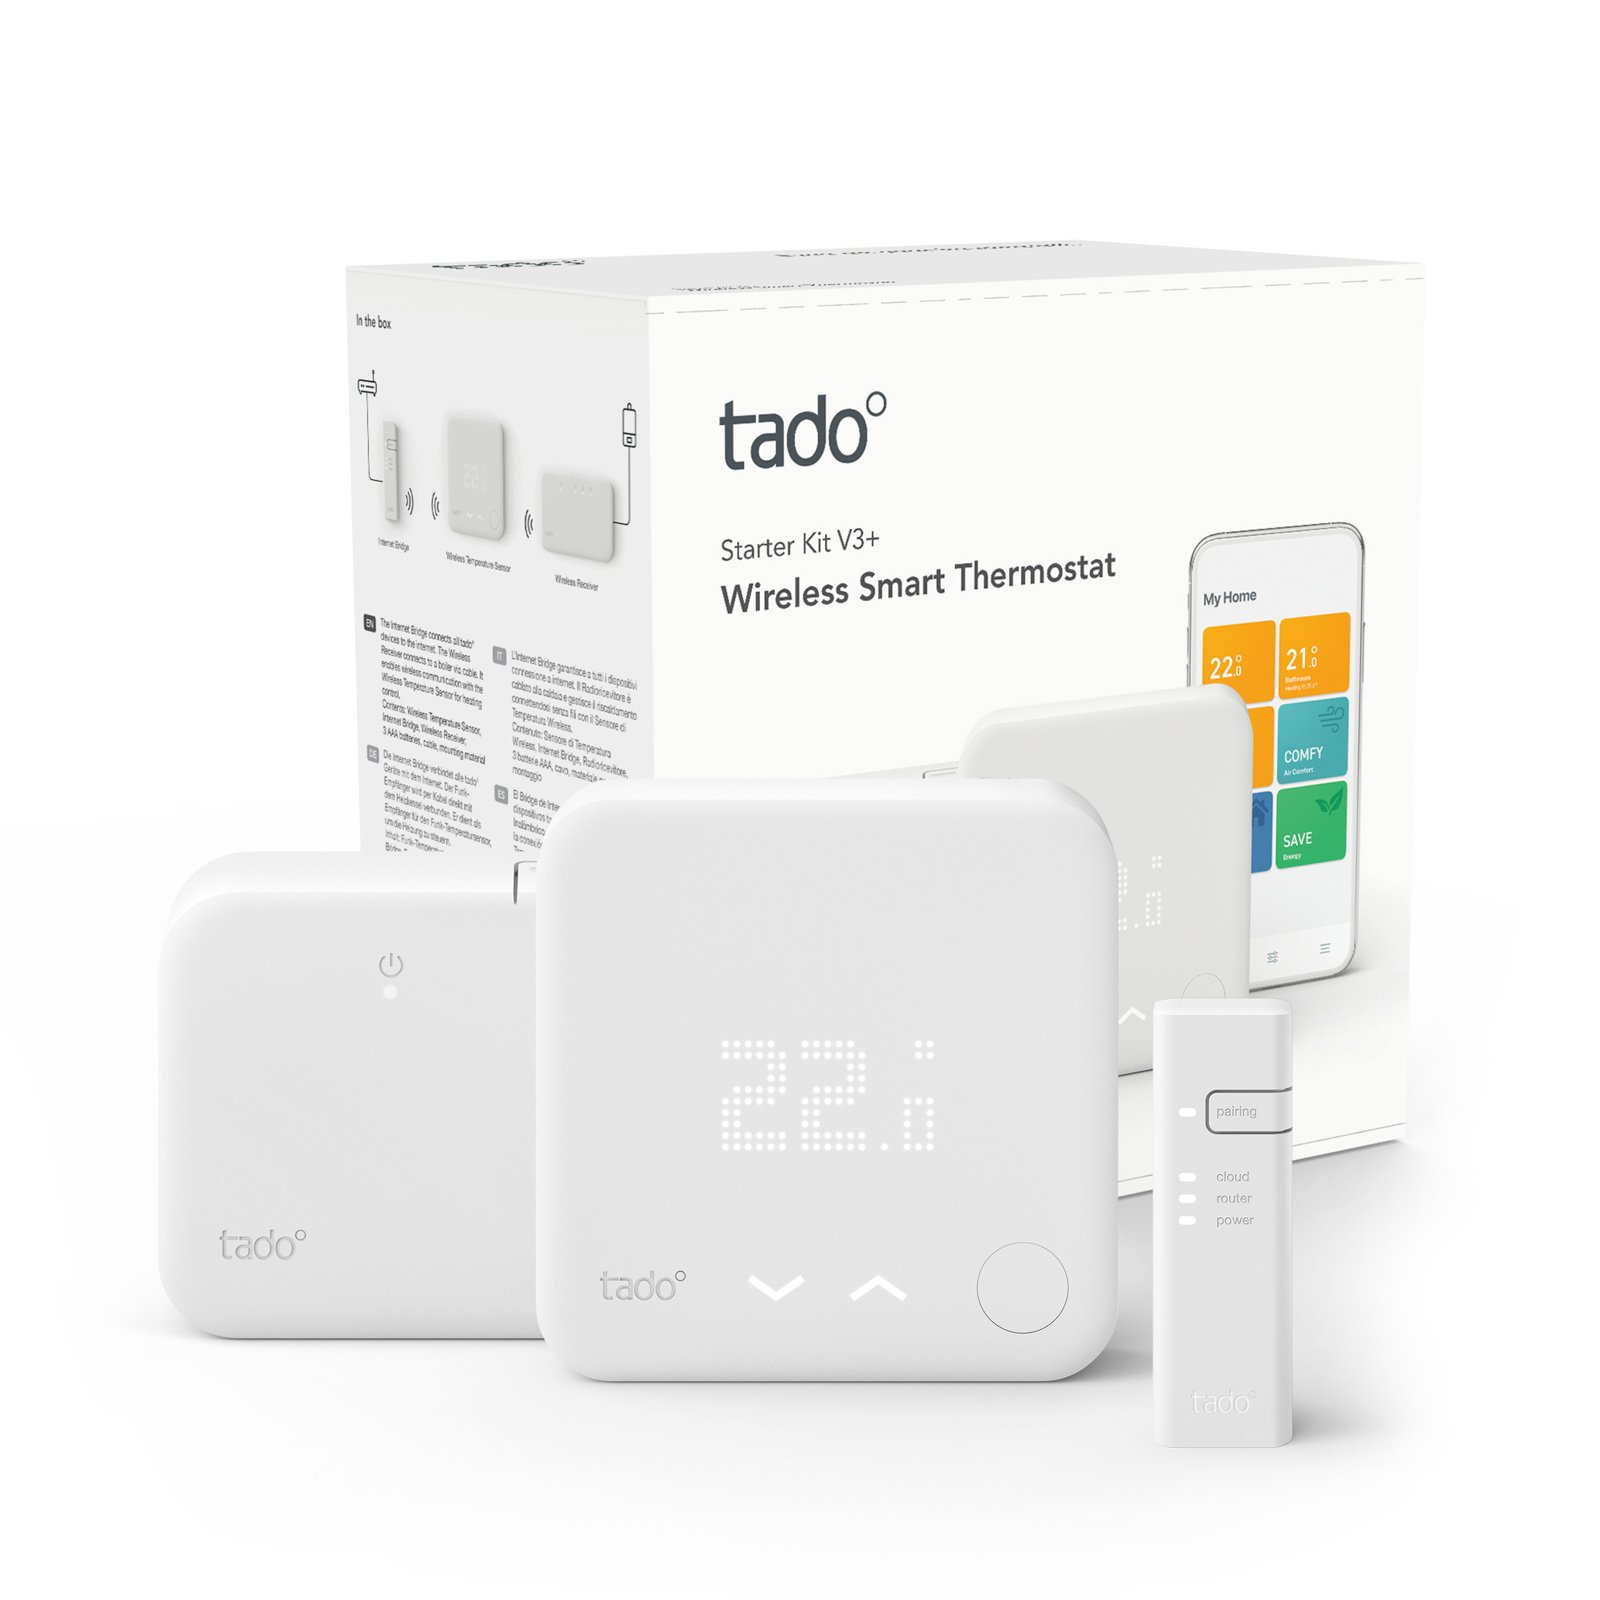 tado° Smart Thermostat Starter Kit V3+ with radio